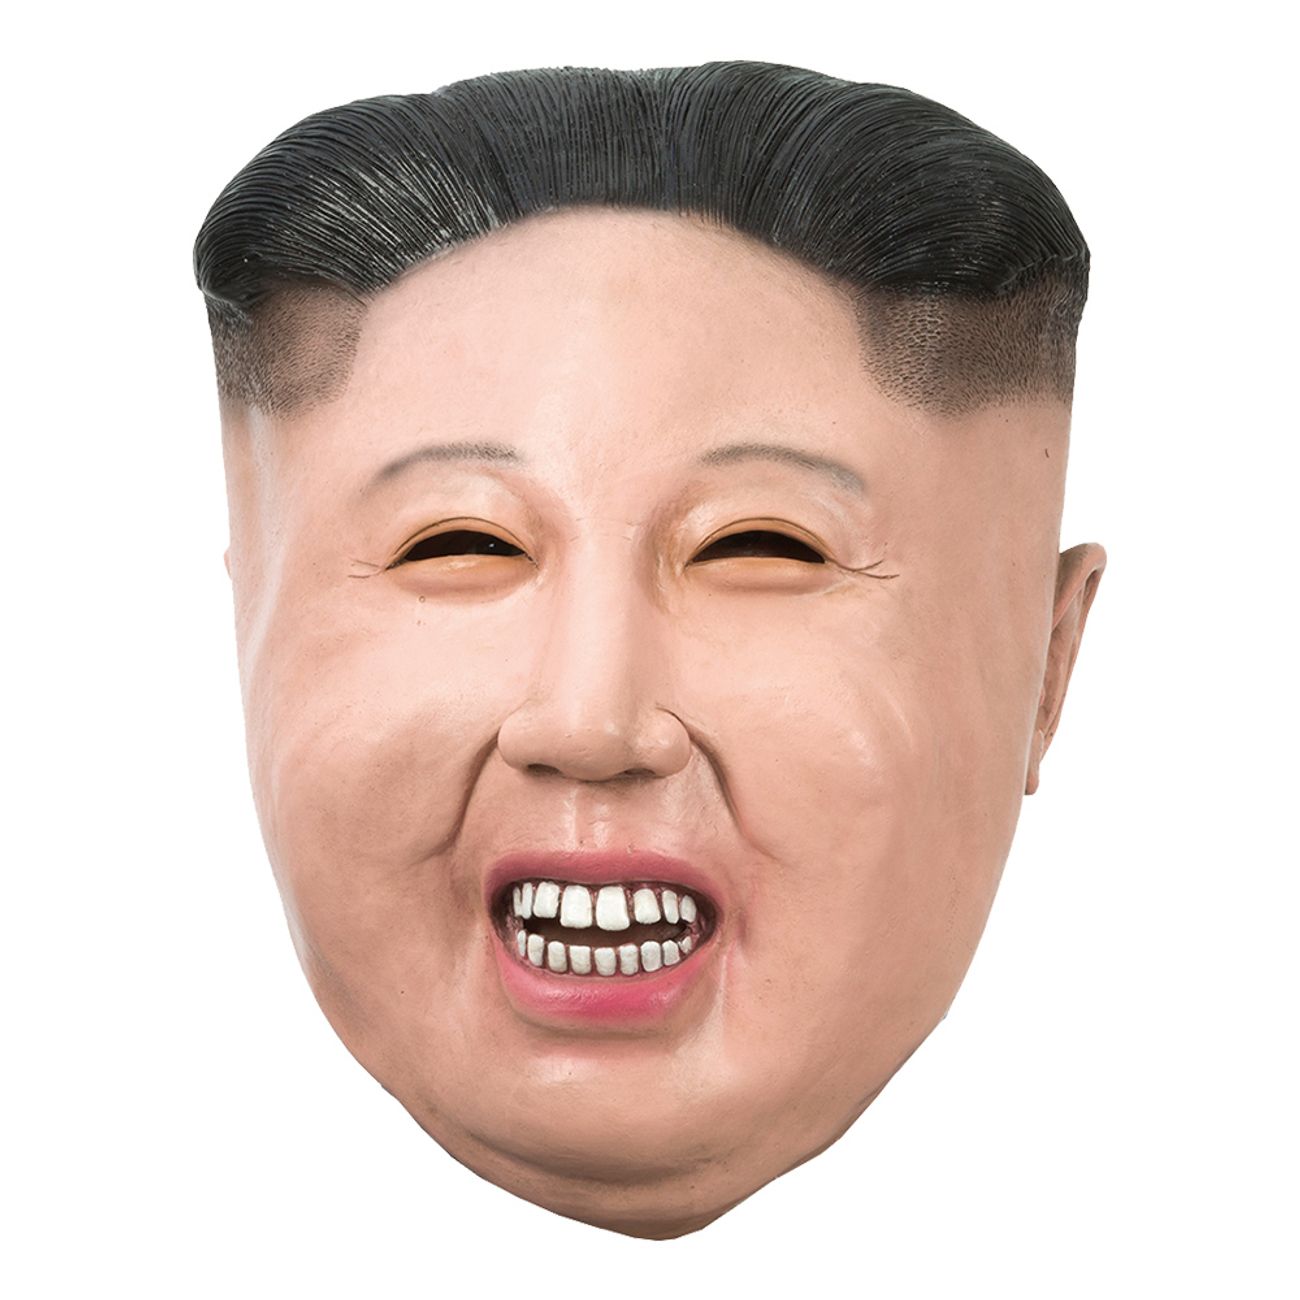 kim-jong-un-mask-1